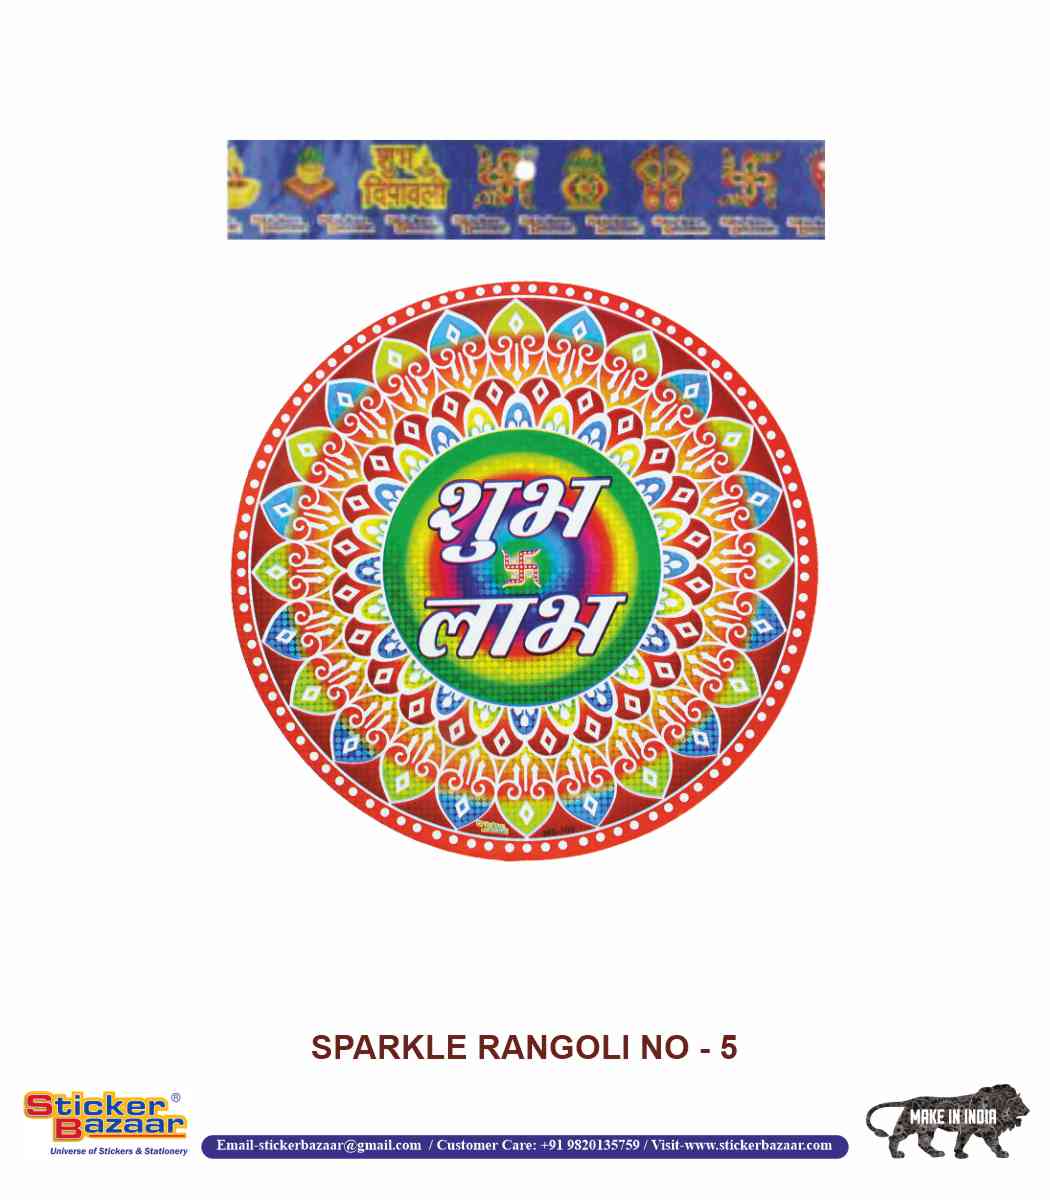 Sticker Bazaar Holo Rangoli SR5 with Header